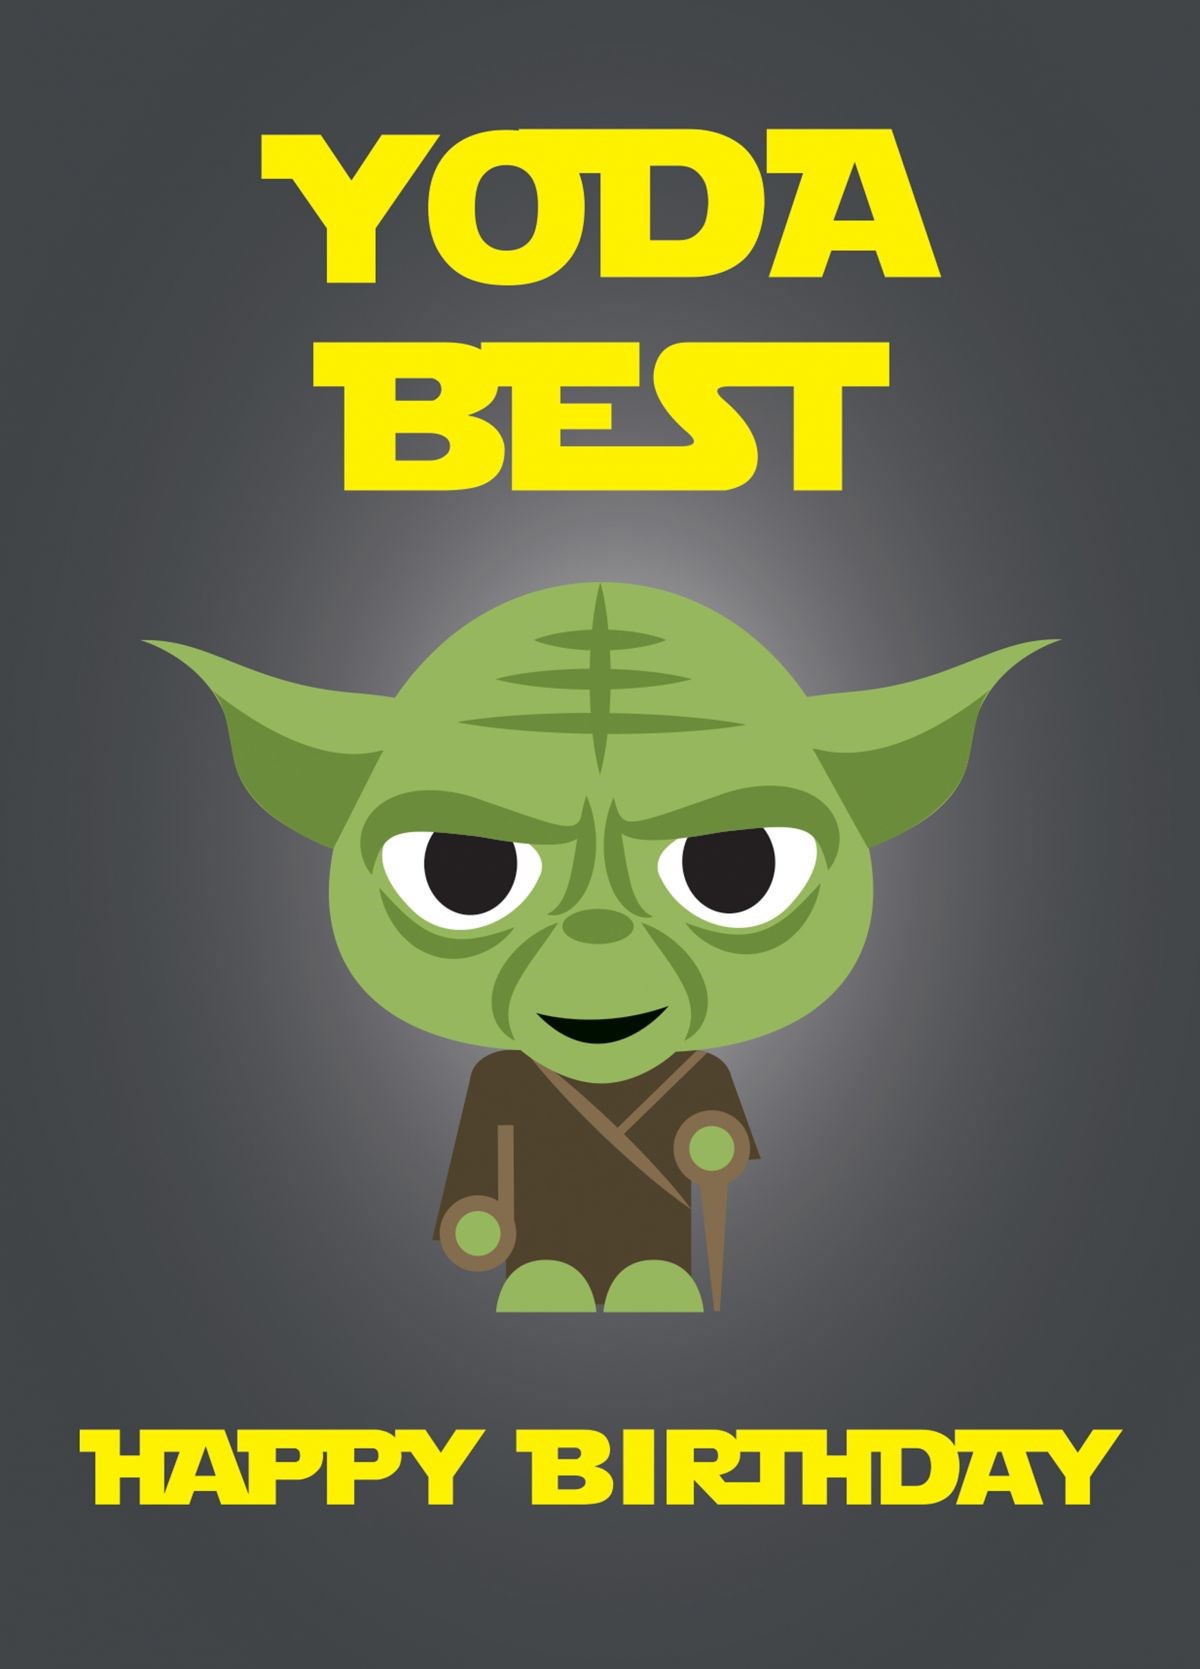 Cute Master Bday Card Funny Birthday Card for Partner Wishing Yoda Birthday Card Star Wars Baby Yoda Birthday for Spouse